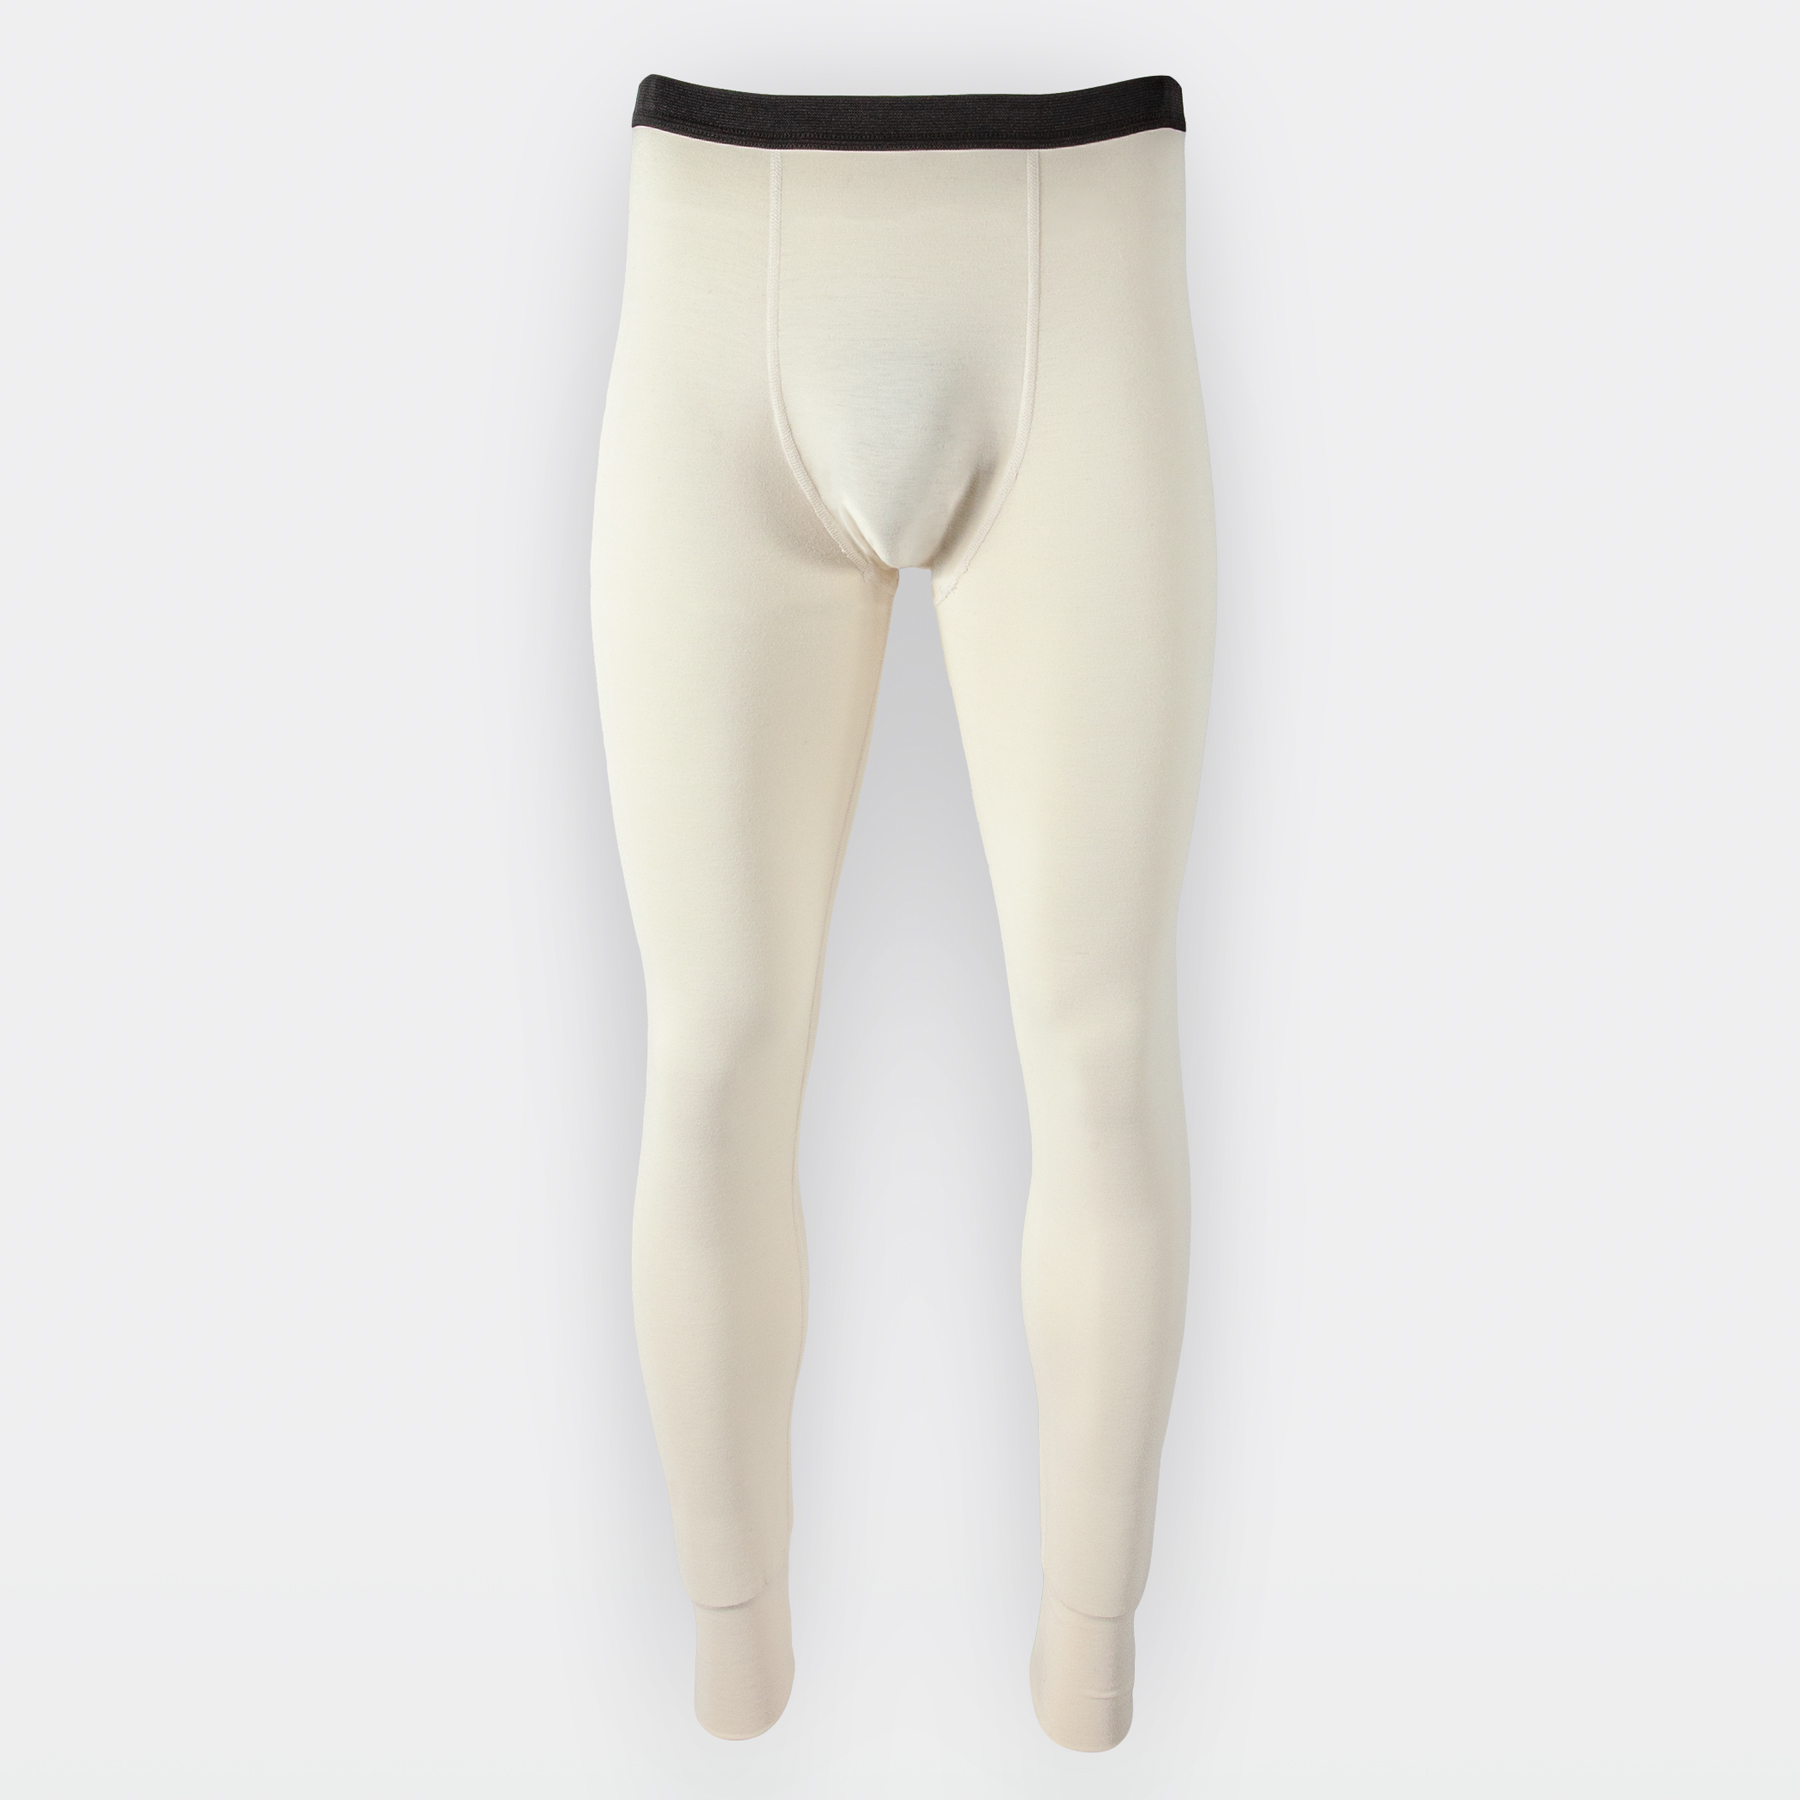 Flame-resistant Underwear • Gibson & Barnes